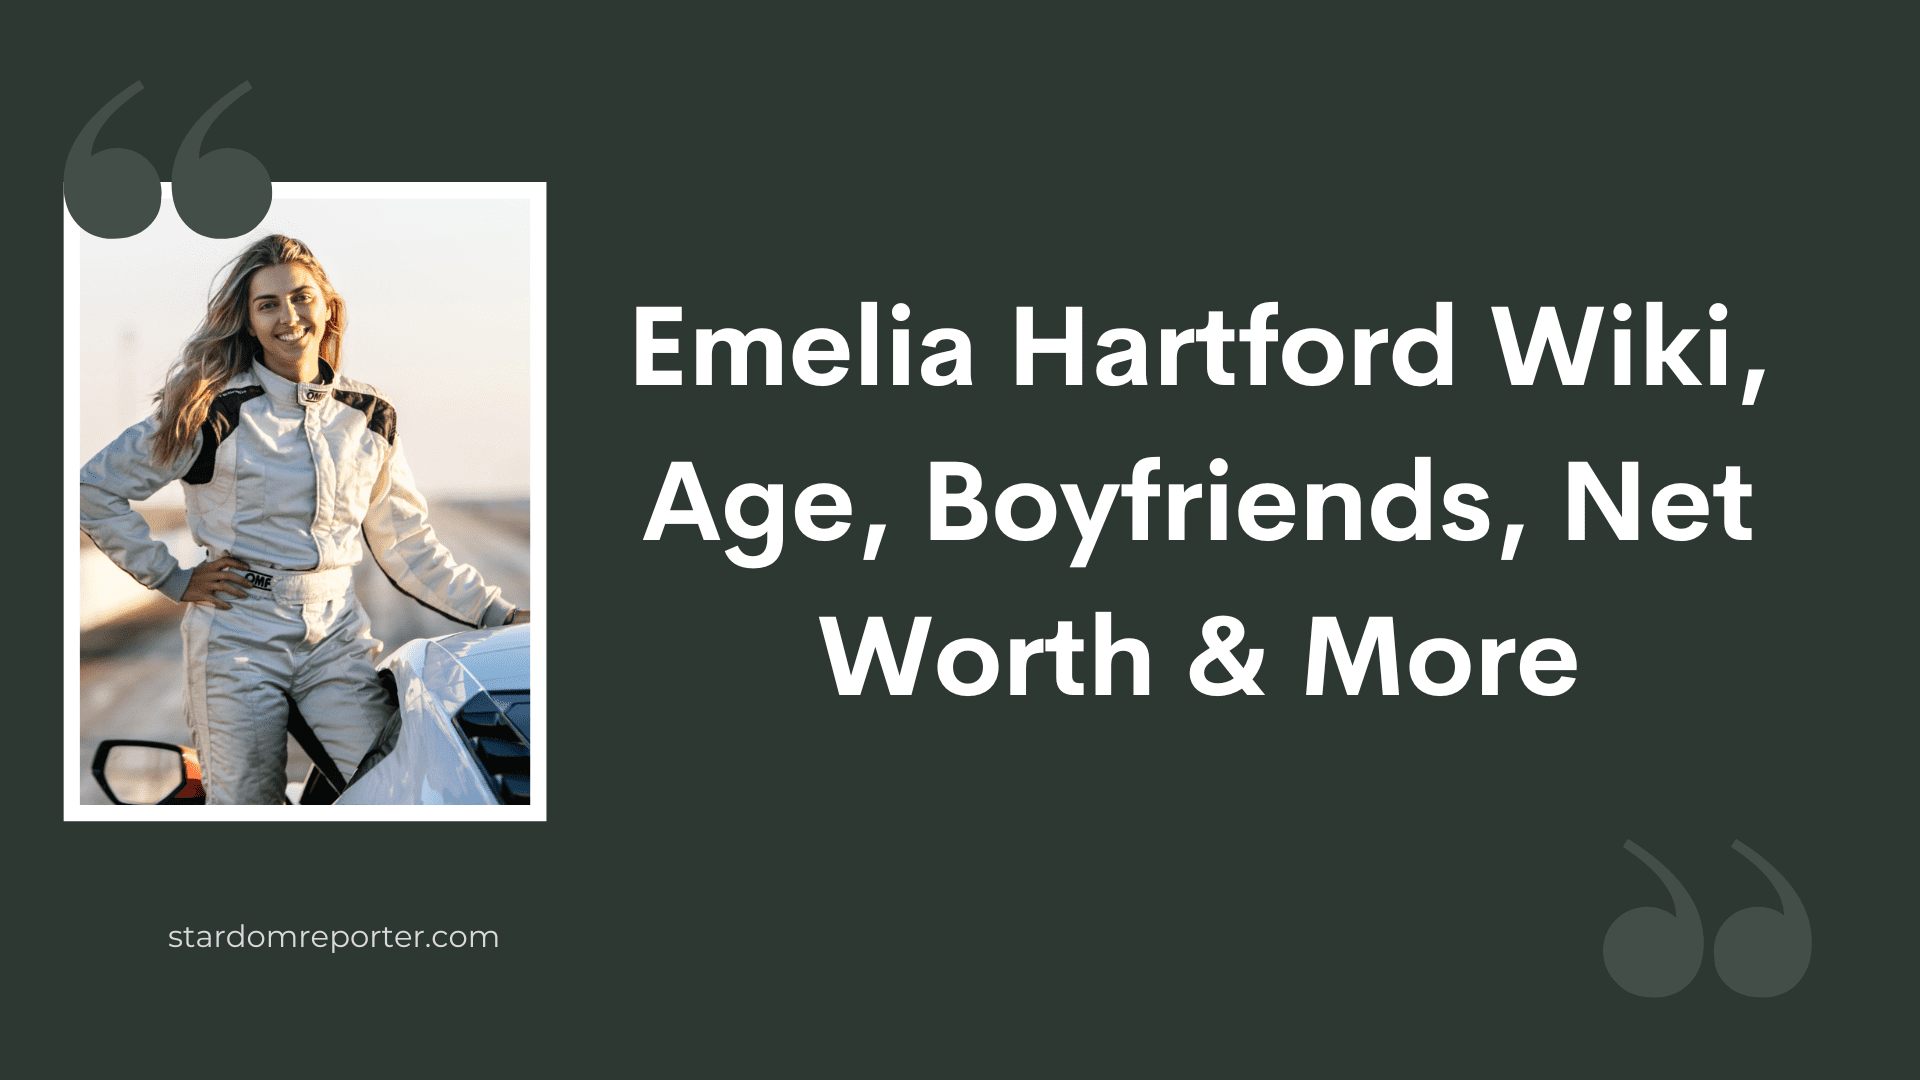 Emelia Hartford Wiki, Age, Bio, Boyfriends, Net Worth & More - 29